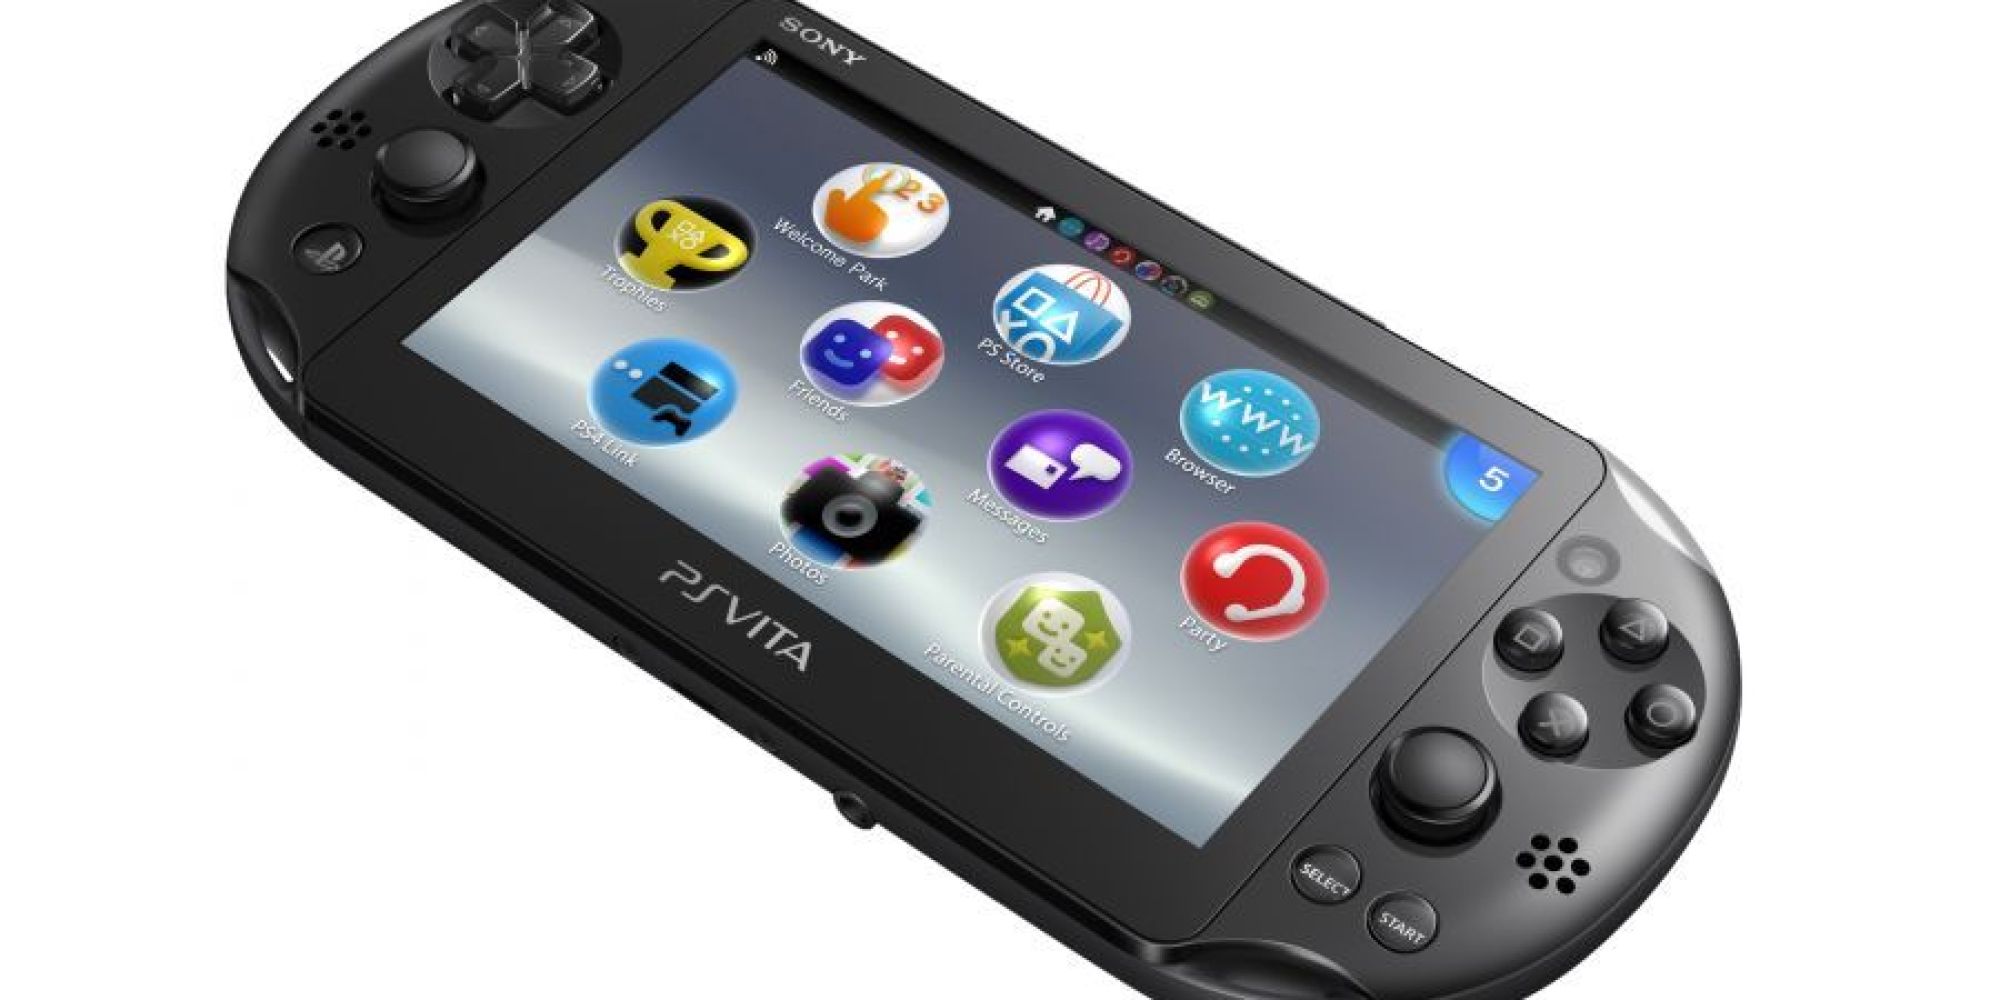 PS Vita Slim coming to North America, bringing Borderlands 2